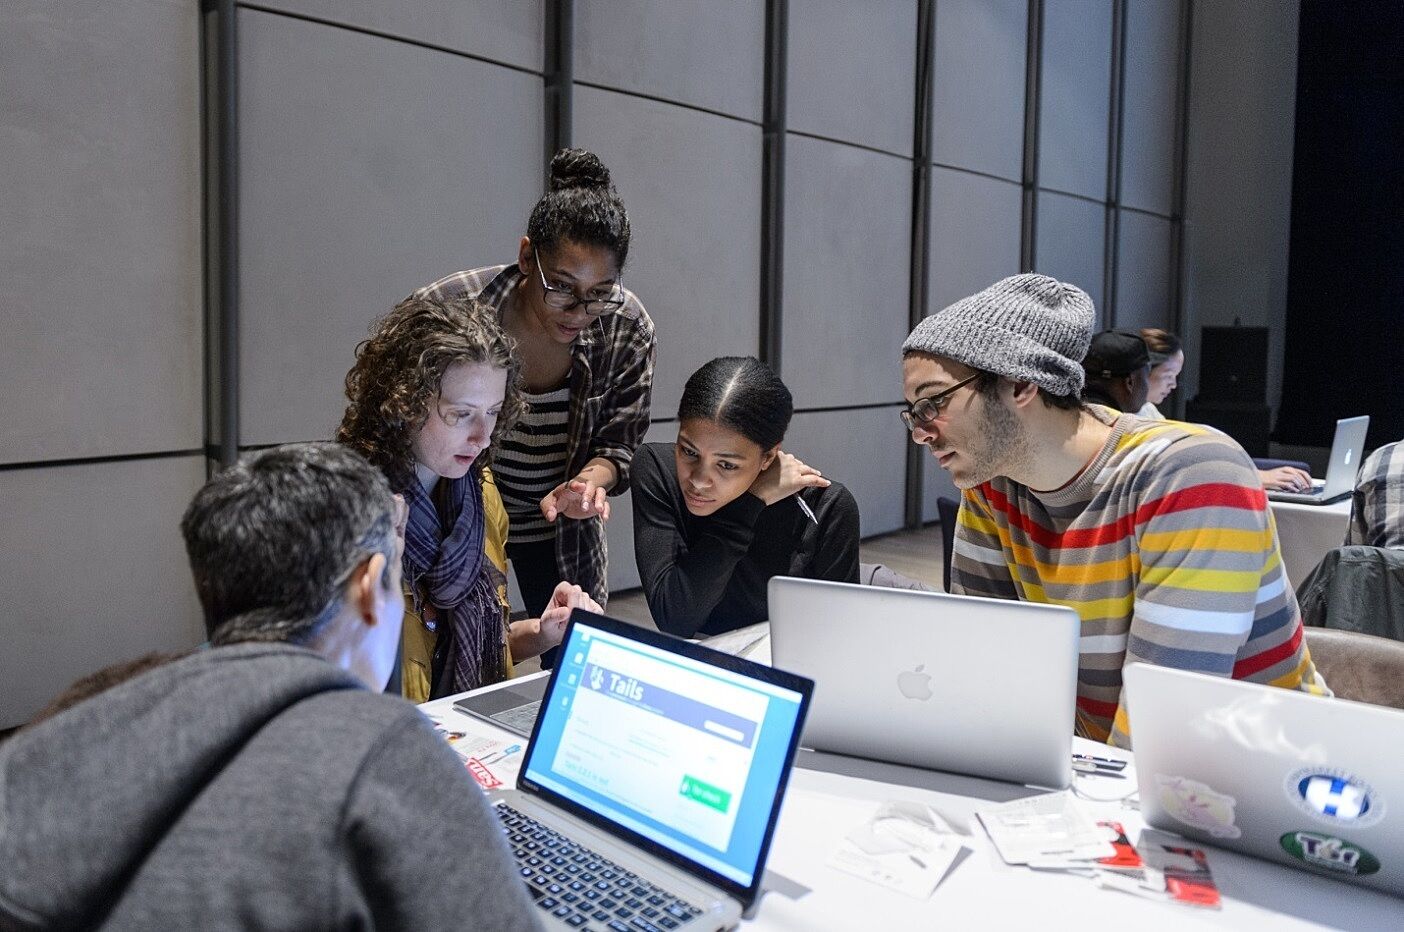 Group participants work at laptops.